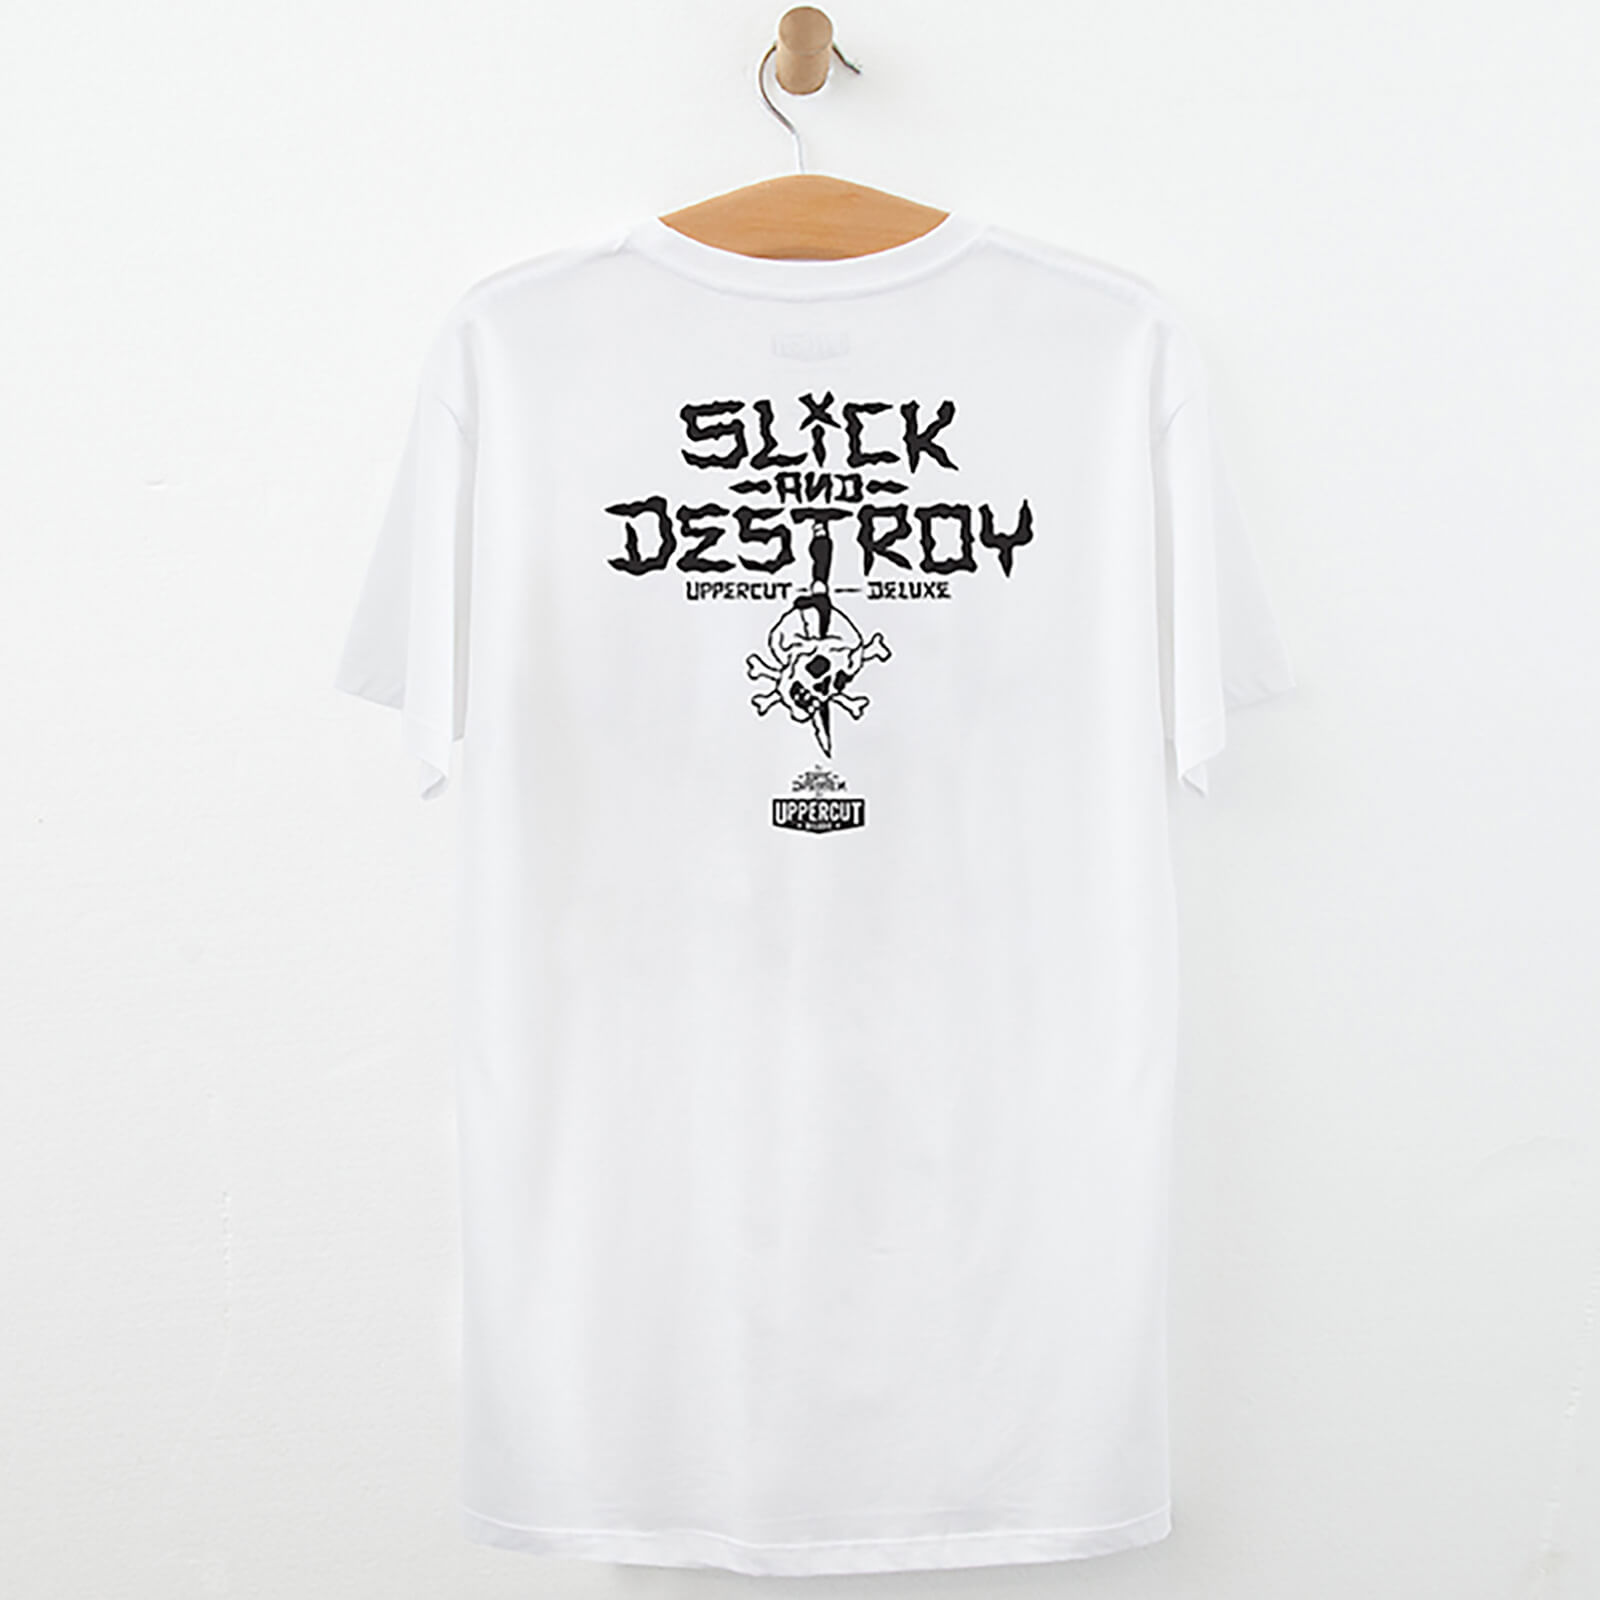 Uppercut Slick and Destroy T-Shirt - White/Black Print